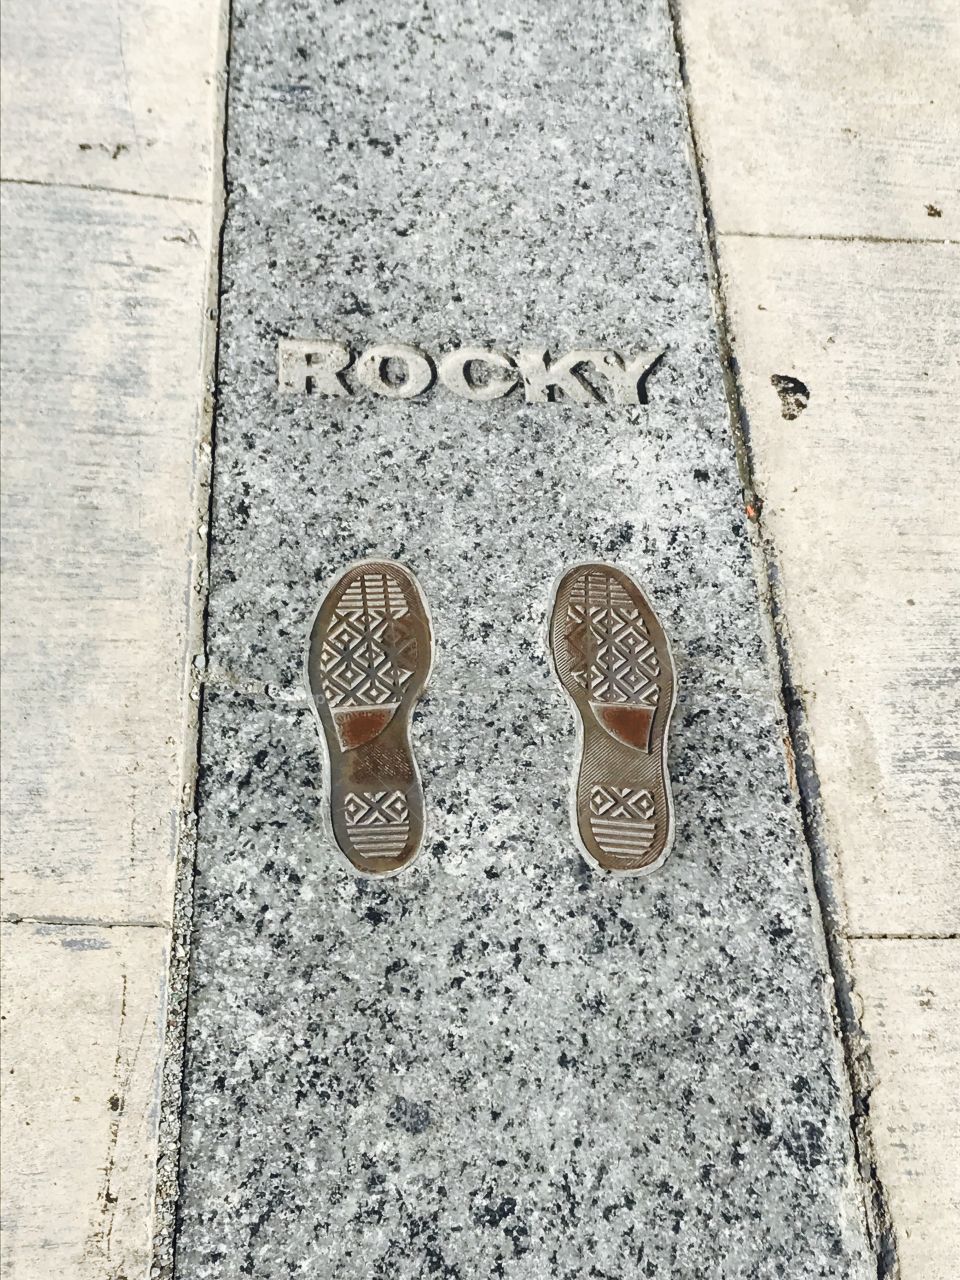 Rocky steps